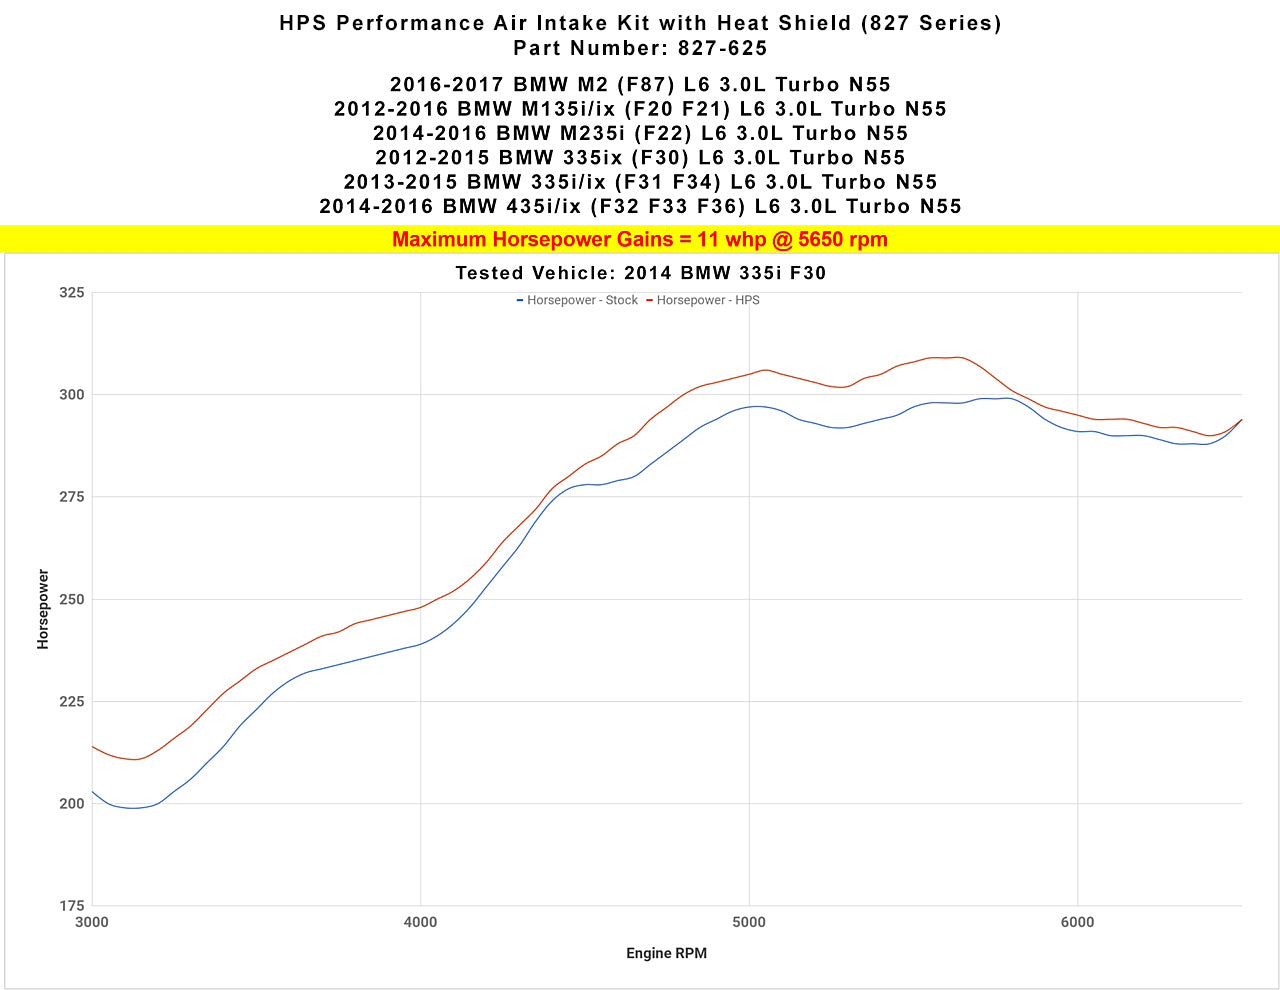 Dyno proven increase horsepower 11 whp HPS Shortram Cold Air Intake Kit 2013-2015 BMW 335i 335ix F31 F34 3.0L Turbo N55 827-625